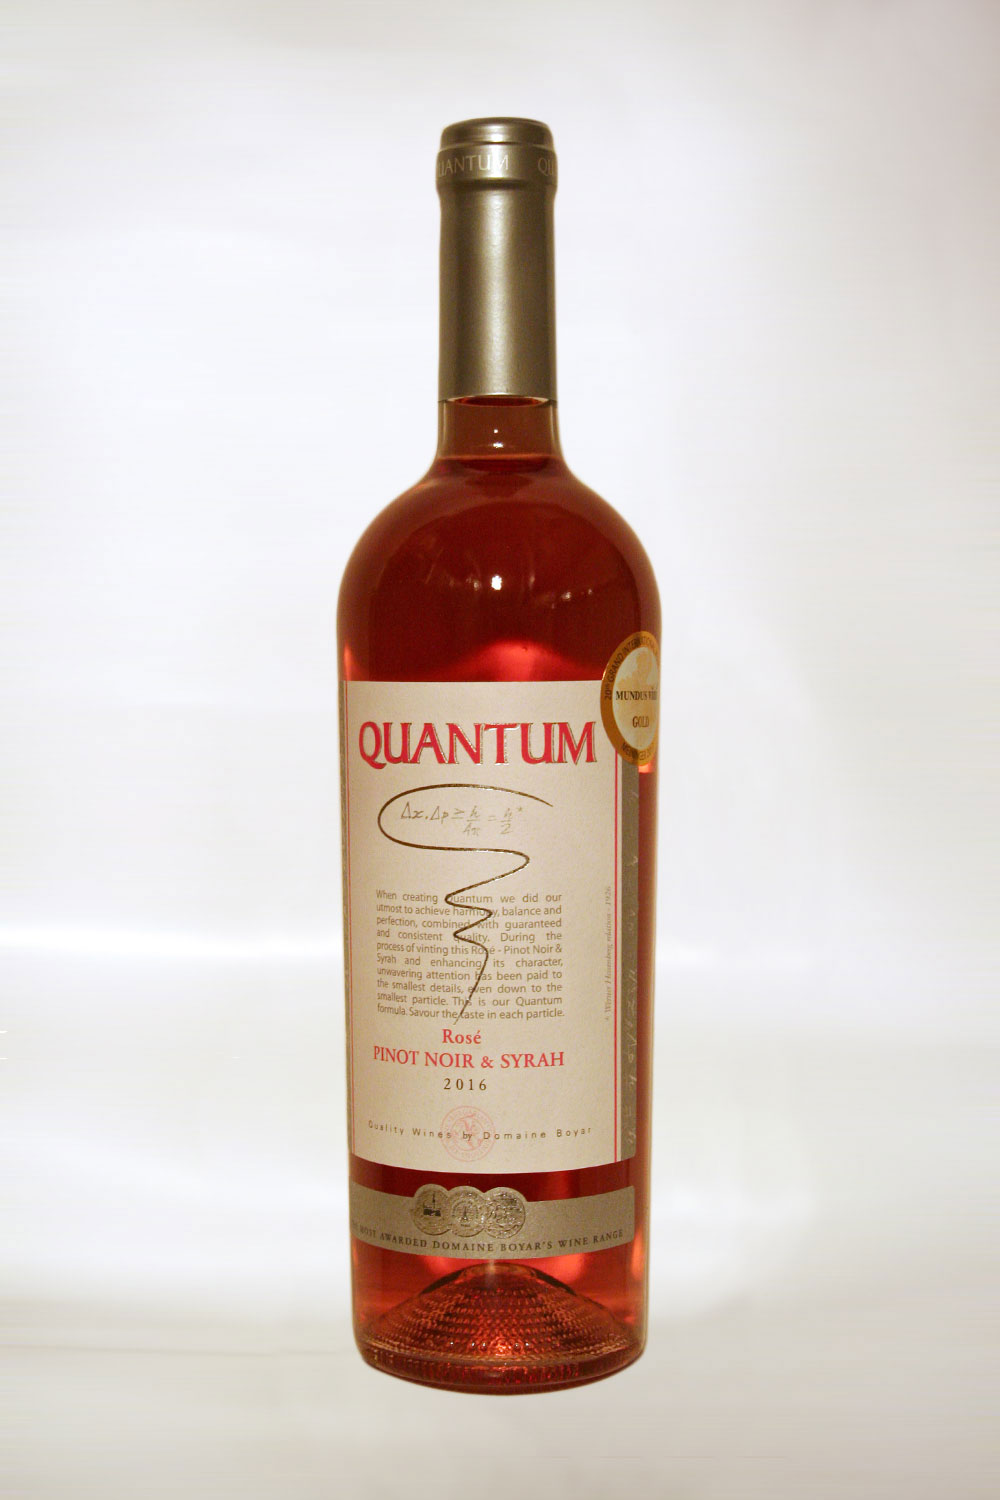 Quantum Rosé Pinot Noir & Syrah 2016